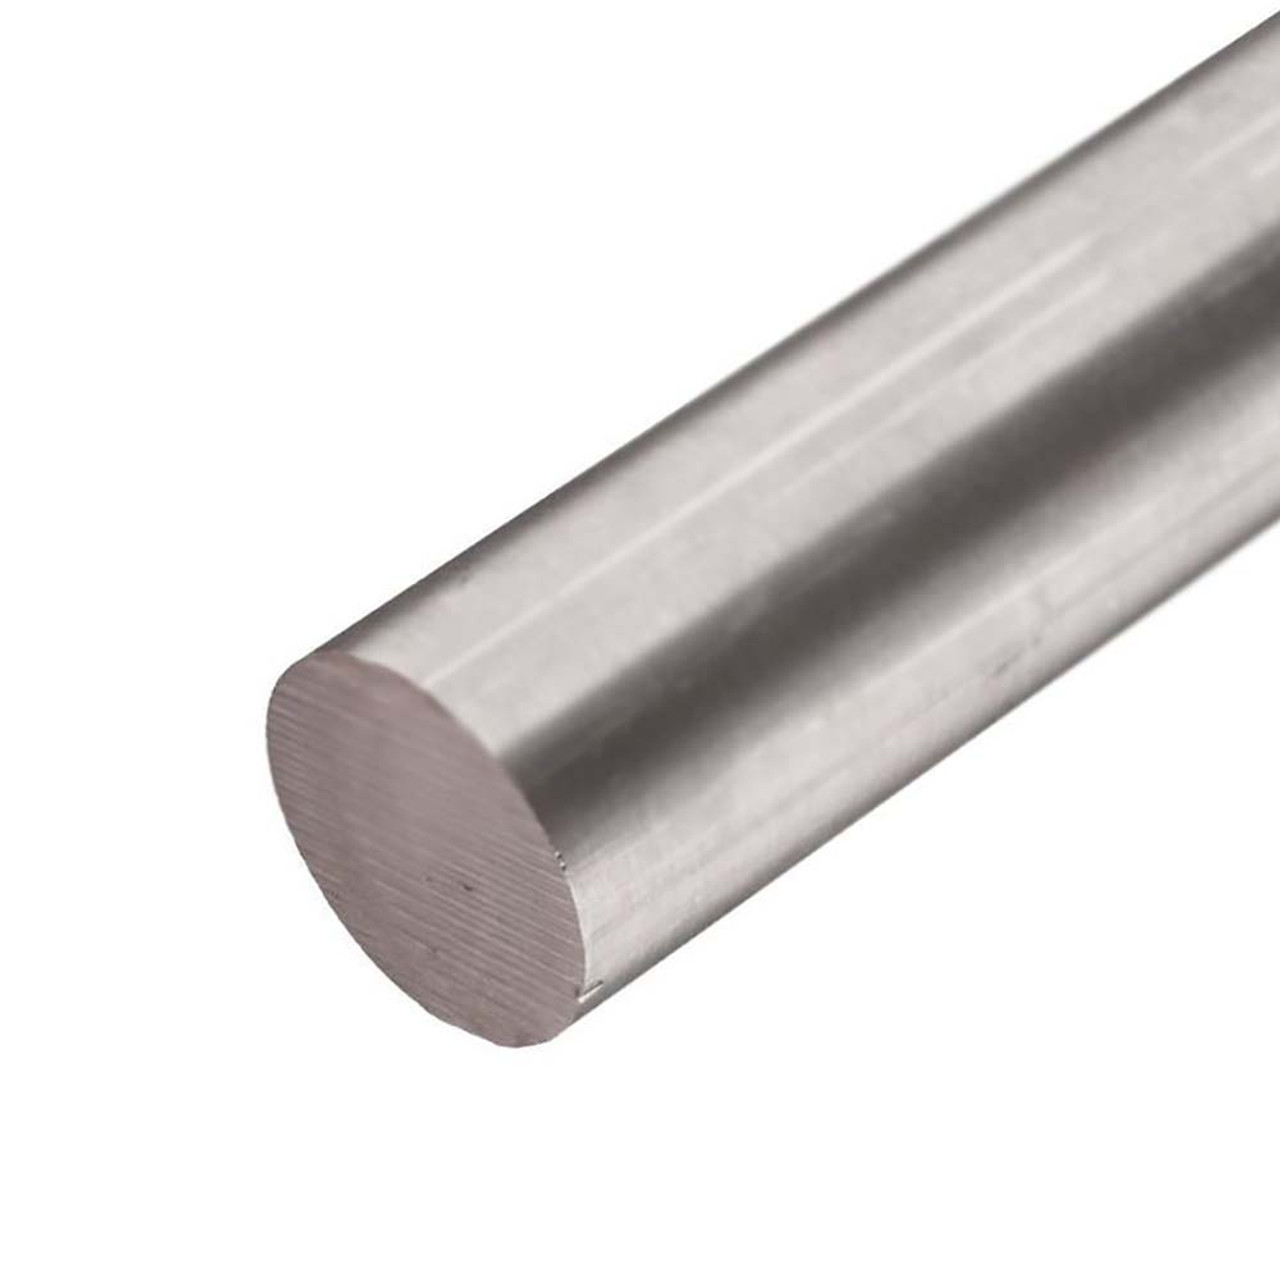 1.750 (1-3/4 inch) x 60 inches, 6061-T6511 Aluminum Round Rod